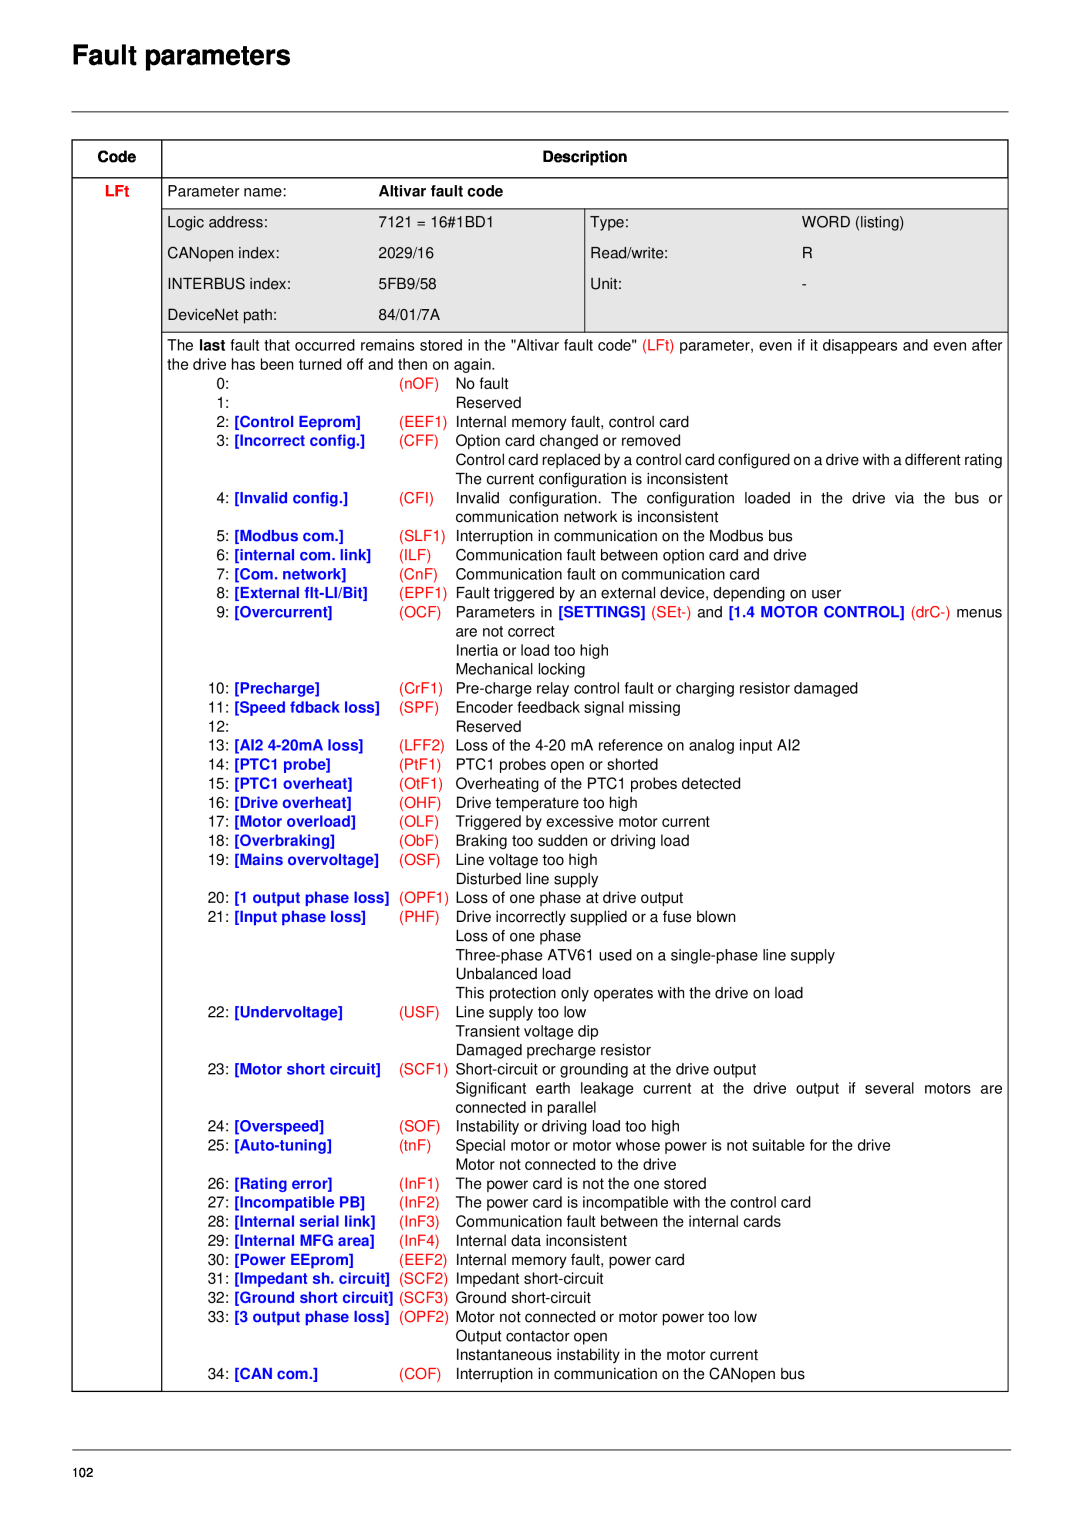 Schneider Electric 61 user manual Fault parameters, Description, Altivar fault code, Control Eeprom 